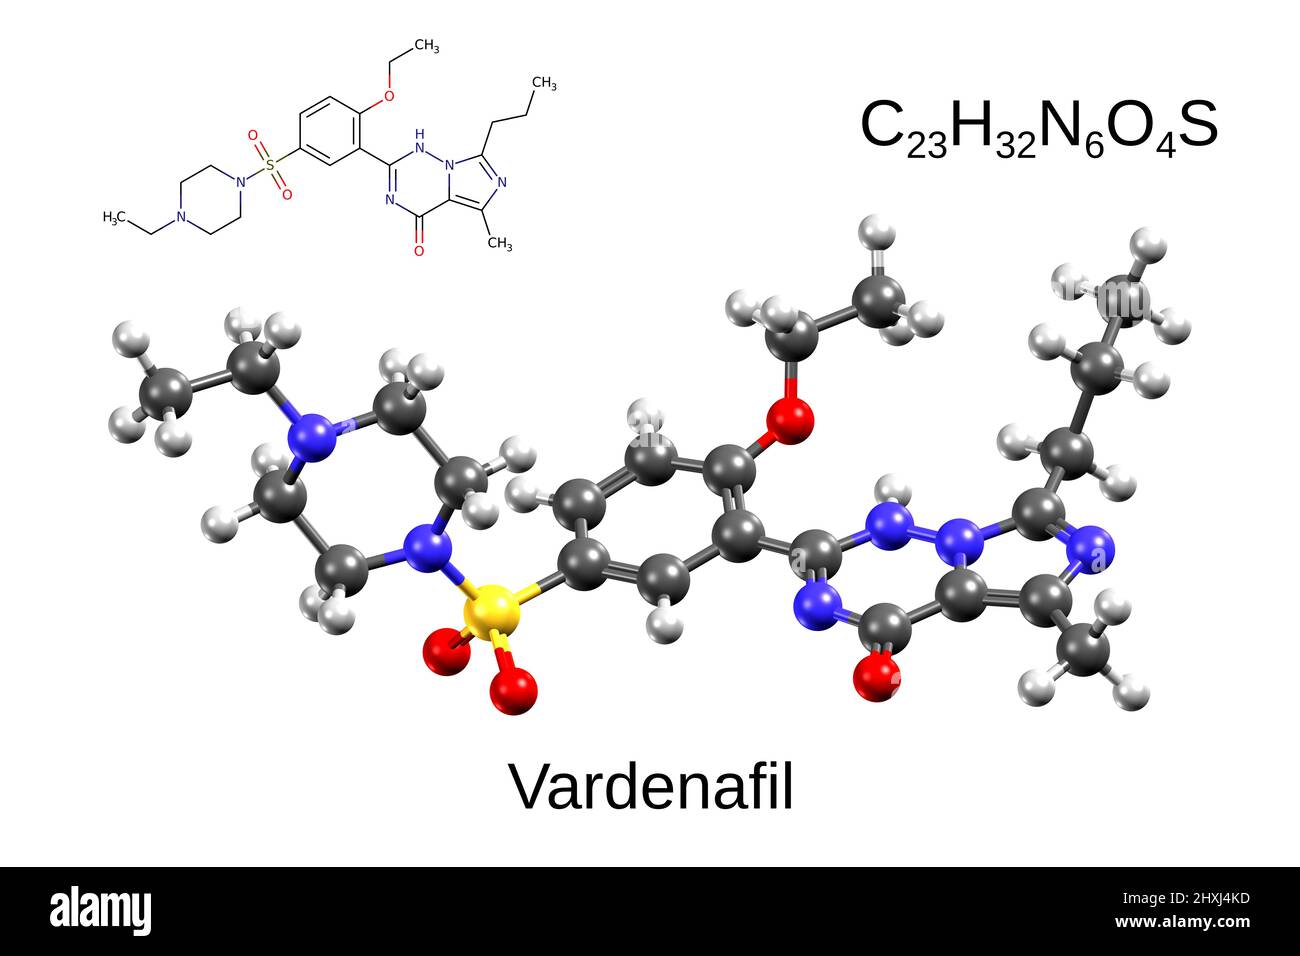 Chemical formula, skeletal formula, and 3D ball-and-stick model of vardenafil, a drug for erectile dysfunction, white background Stock Photo